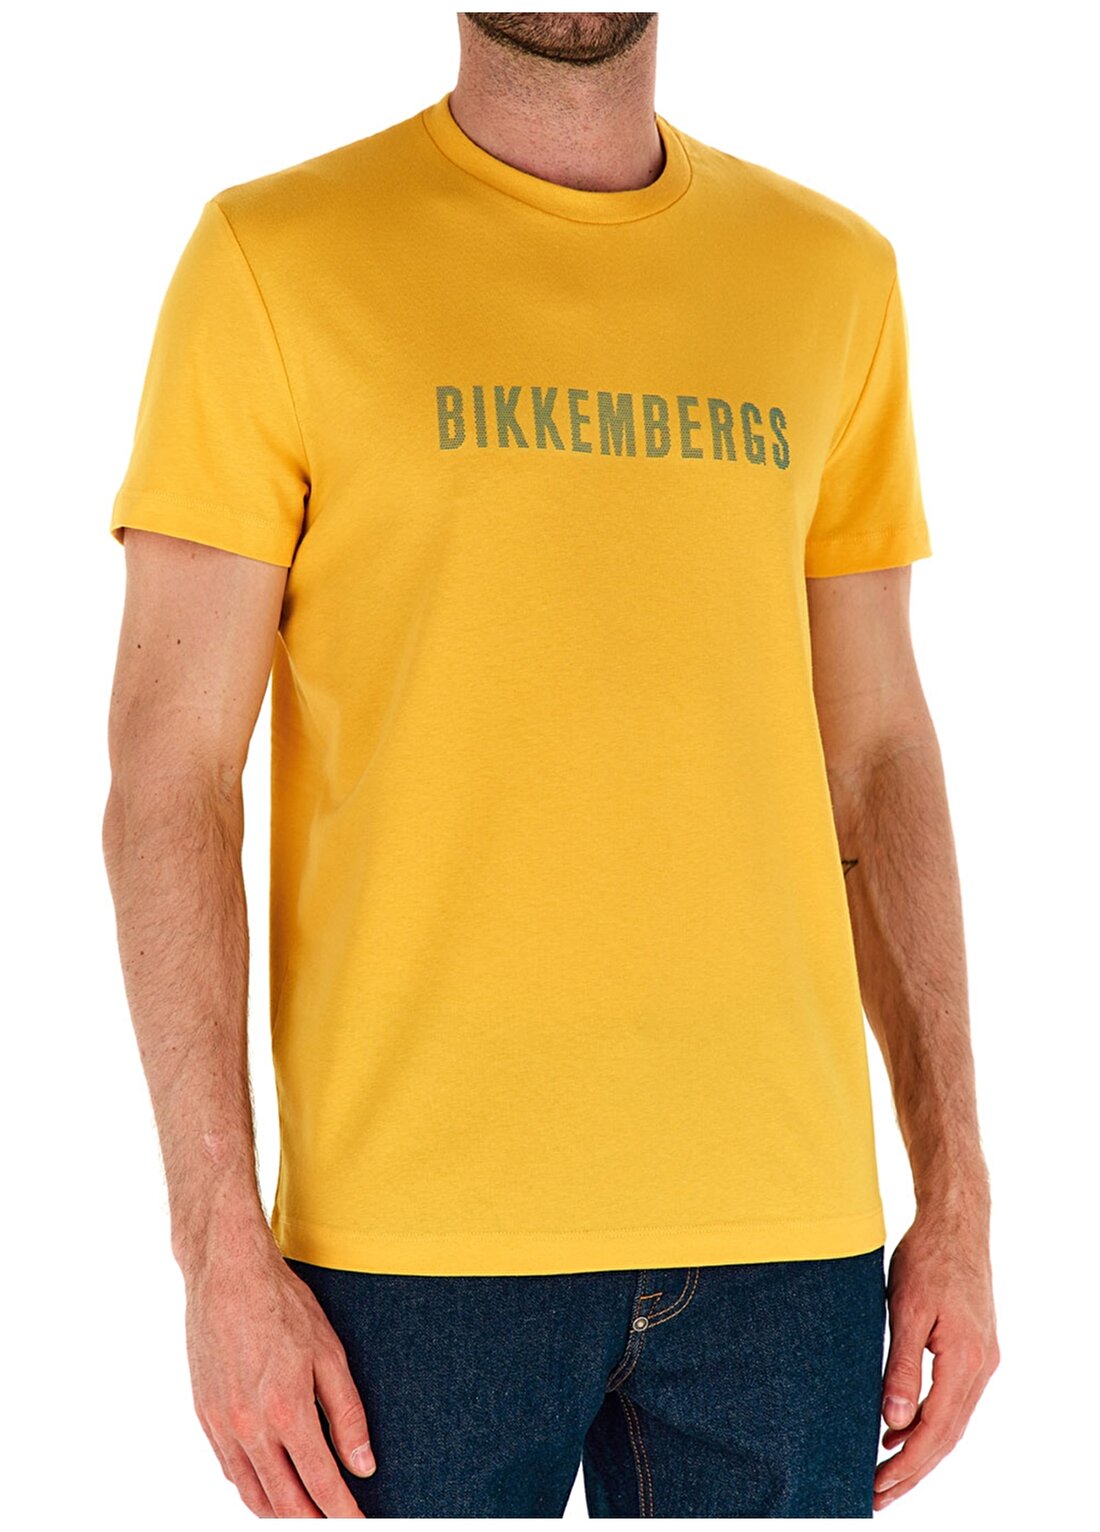 Bikkembergs Turuncu Erkek T-Shirt C 4 101 2V